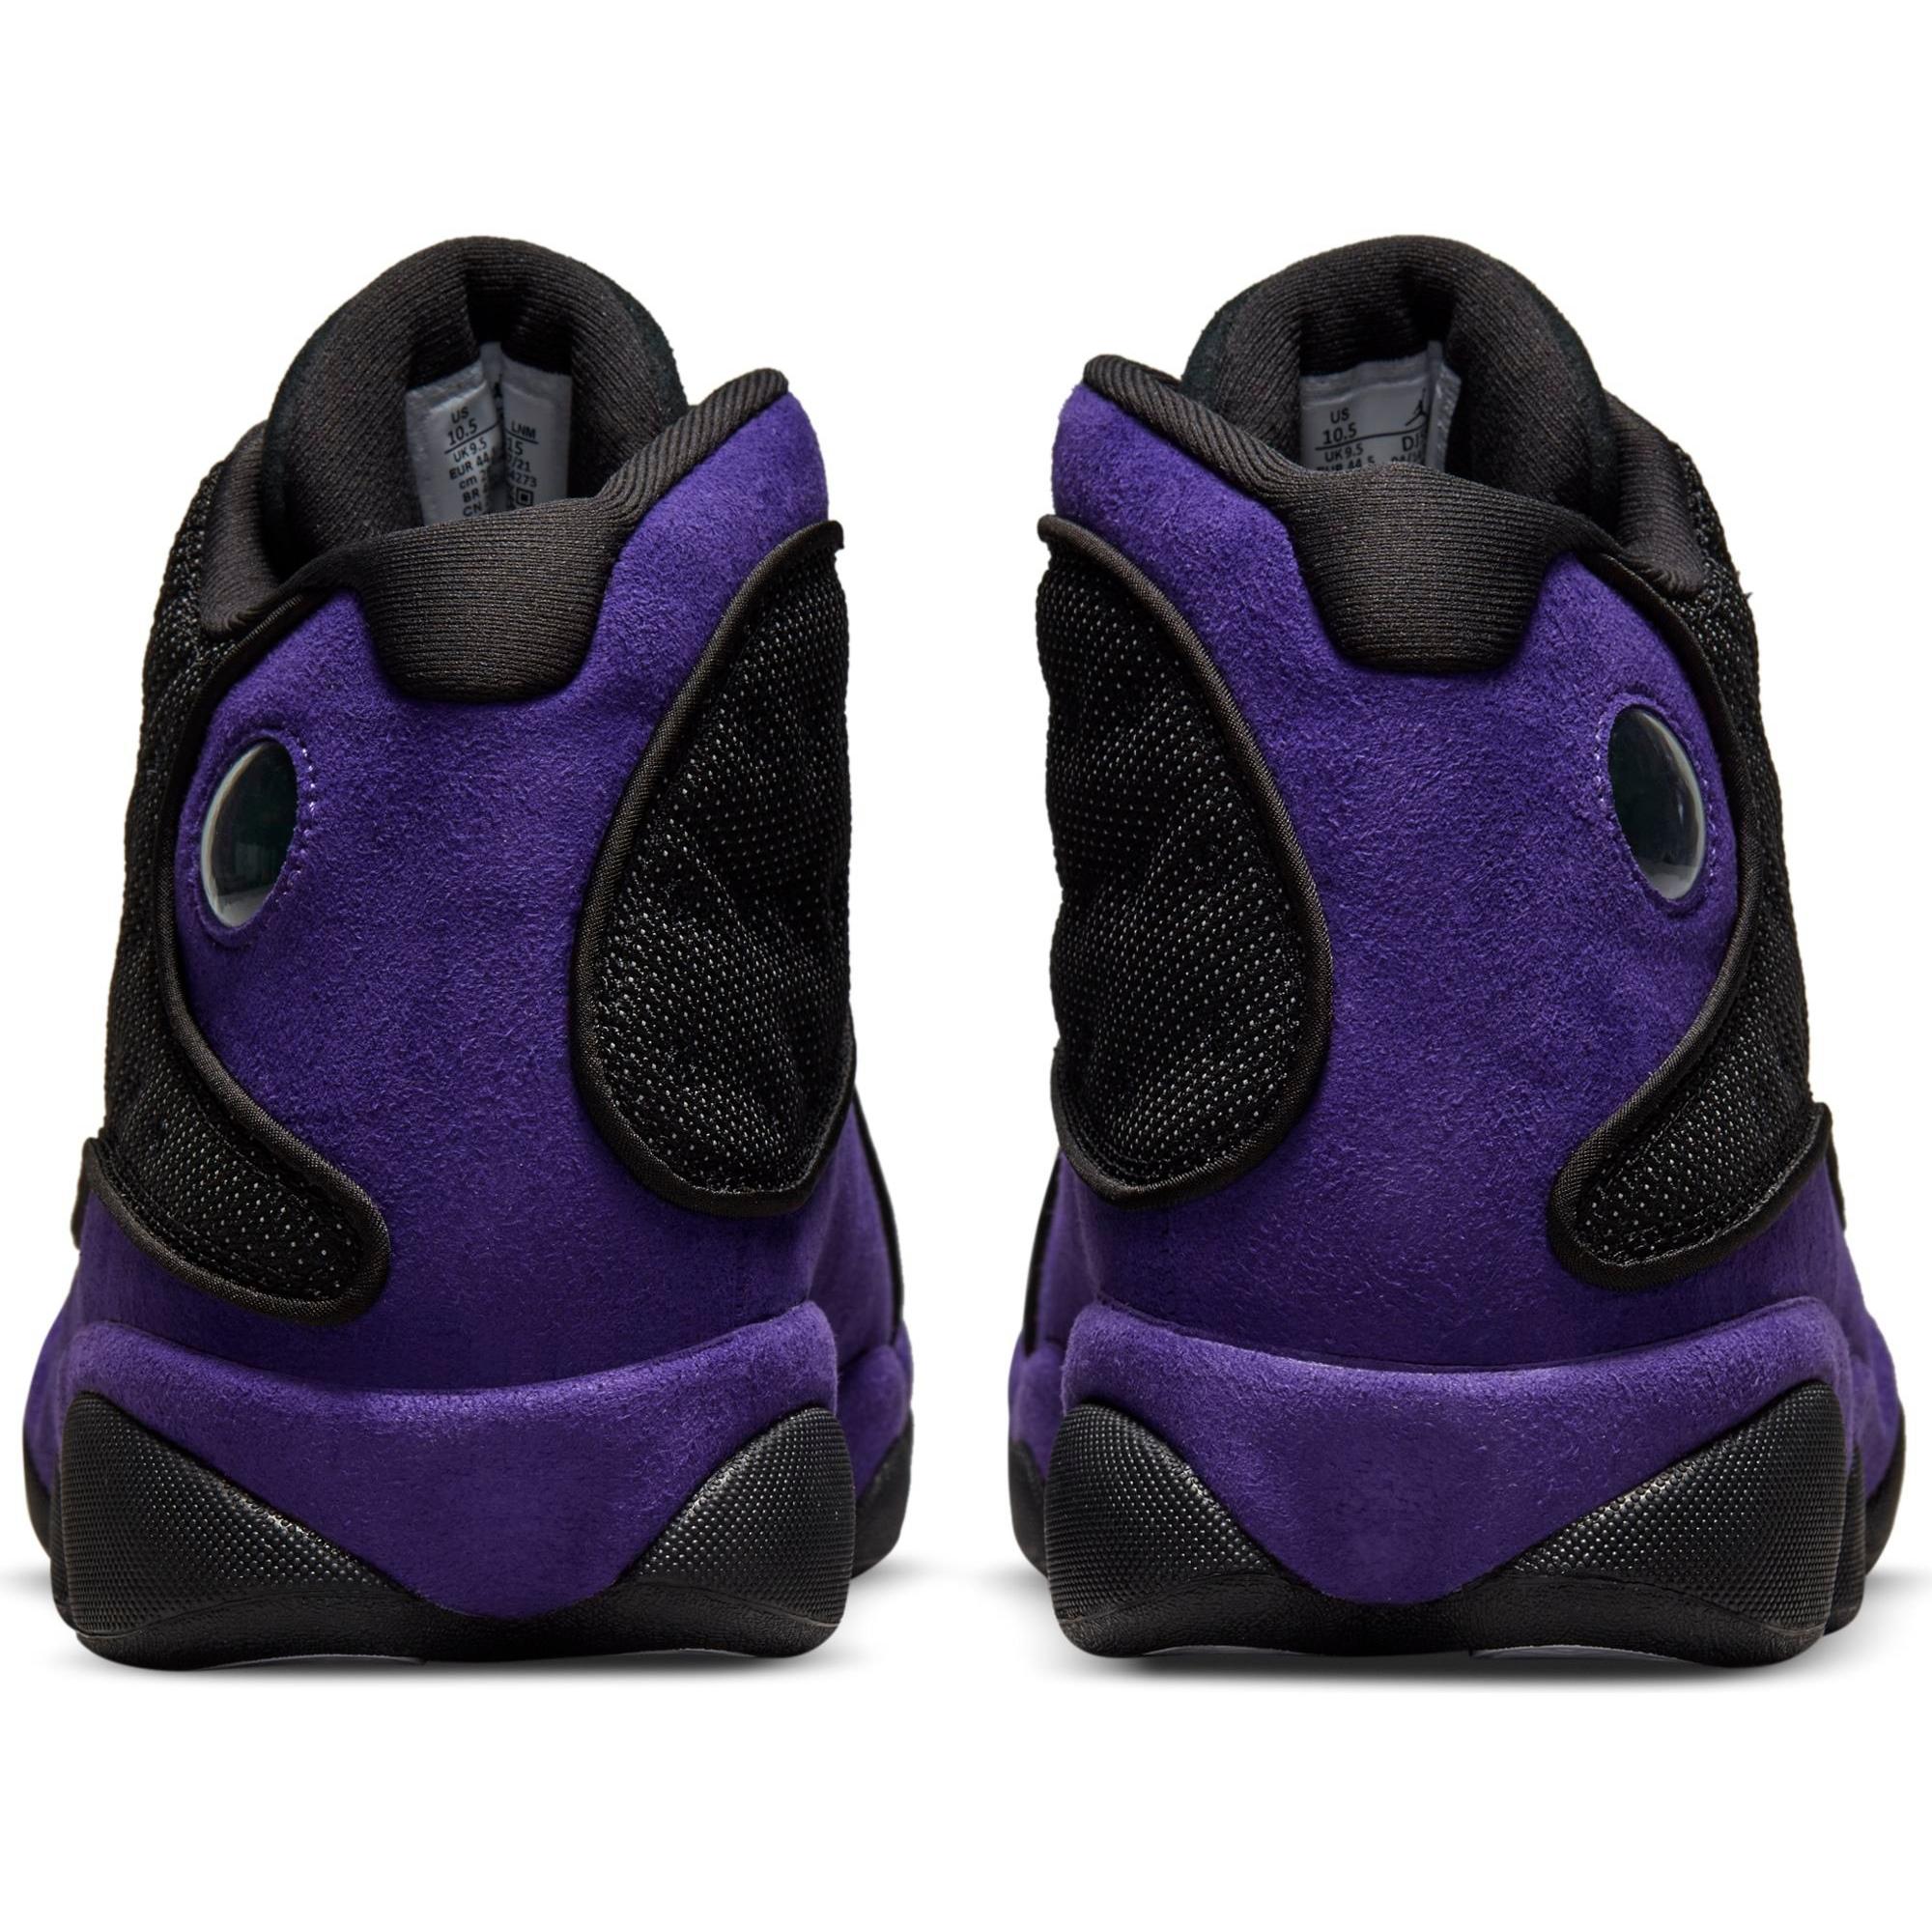 Sneakers Release – Jordan 8 Retro “Paprika”